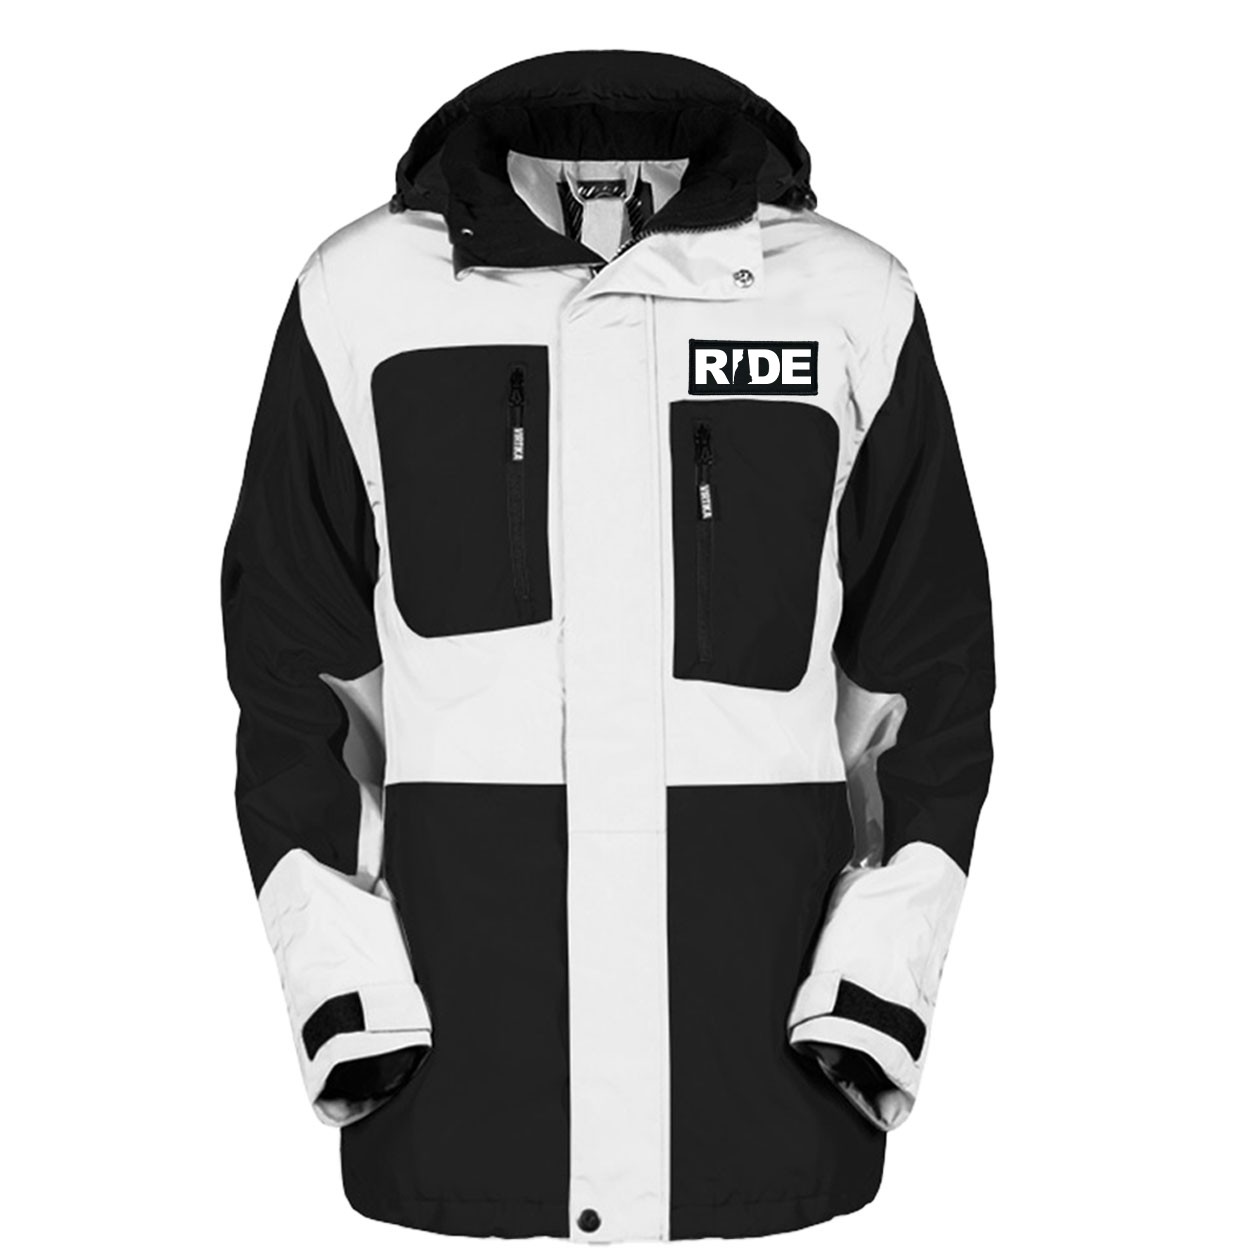 Ride New Hampshire Pro Waterproof Breathable Winter Virtika Jacket Black/White (White Logo)